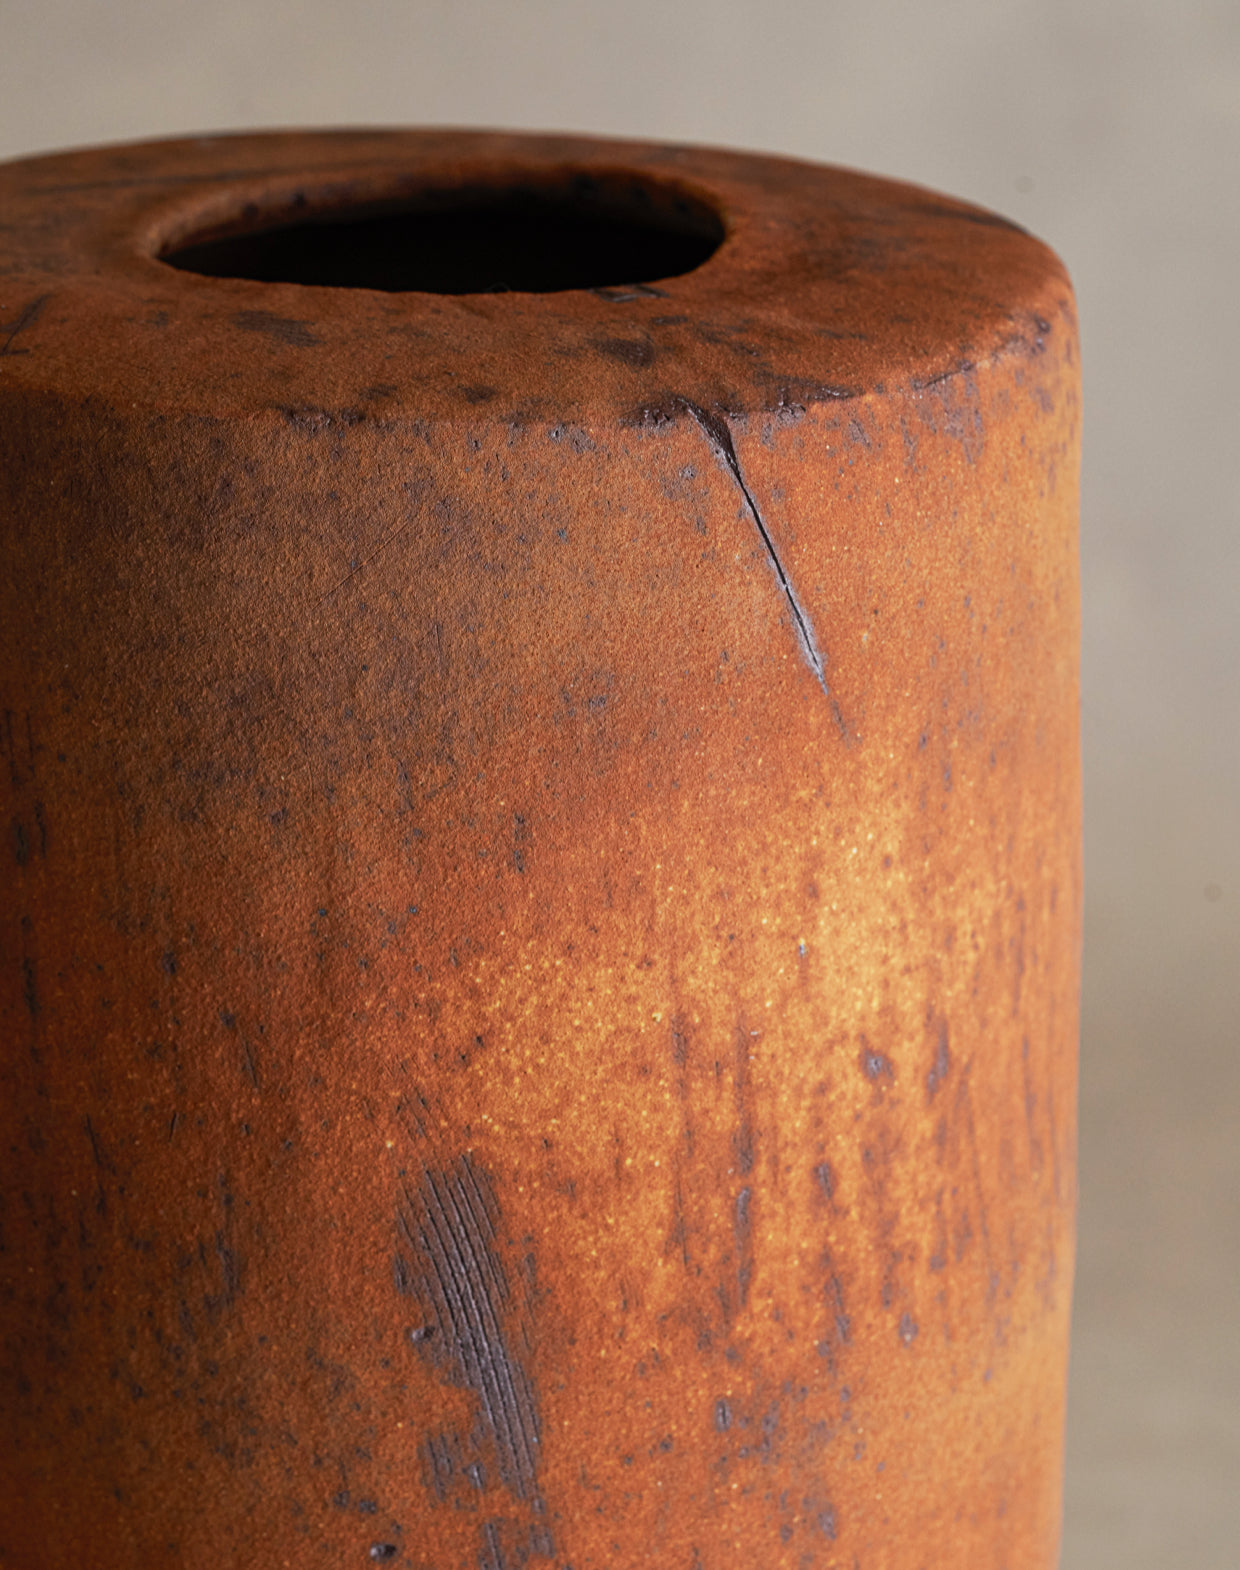 Rick Hintze Coiled Stoneware Vessel, "Untitled" No. 14